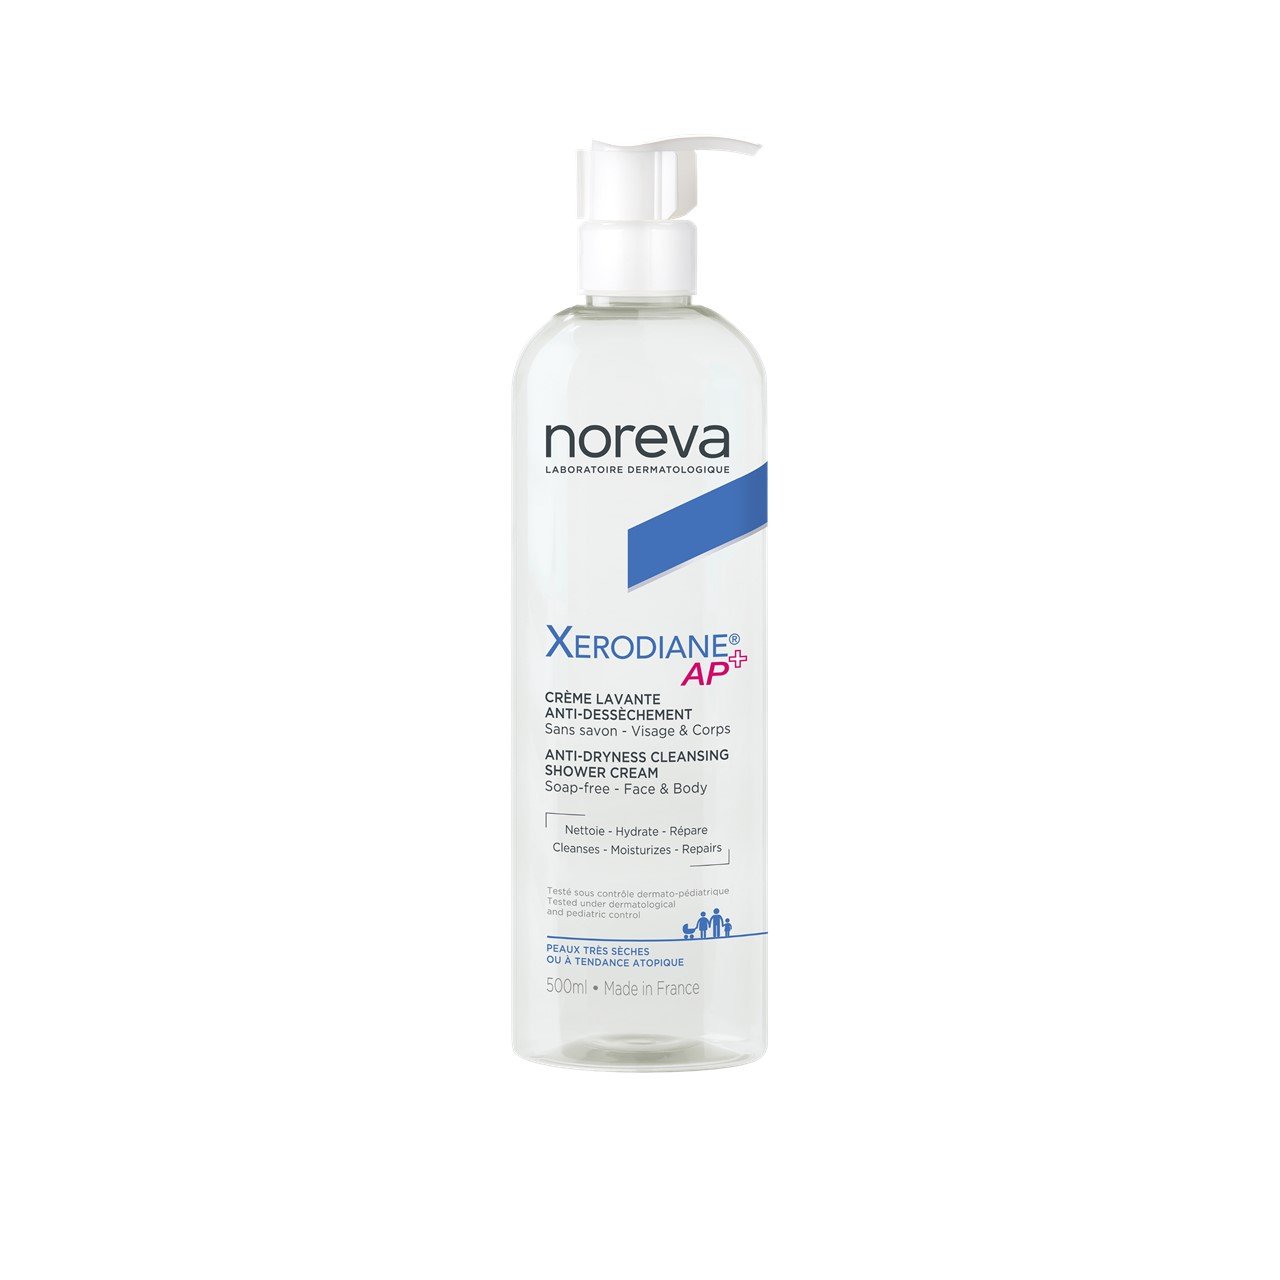 Noreva Xerodiane AP+ Anti-Dryness Cleansing Shower Cream 500ml (16.91fl oz)